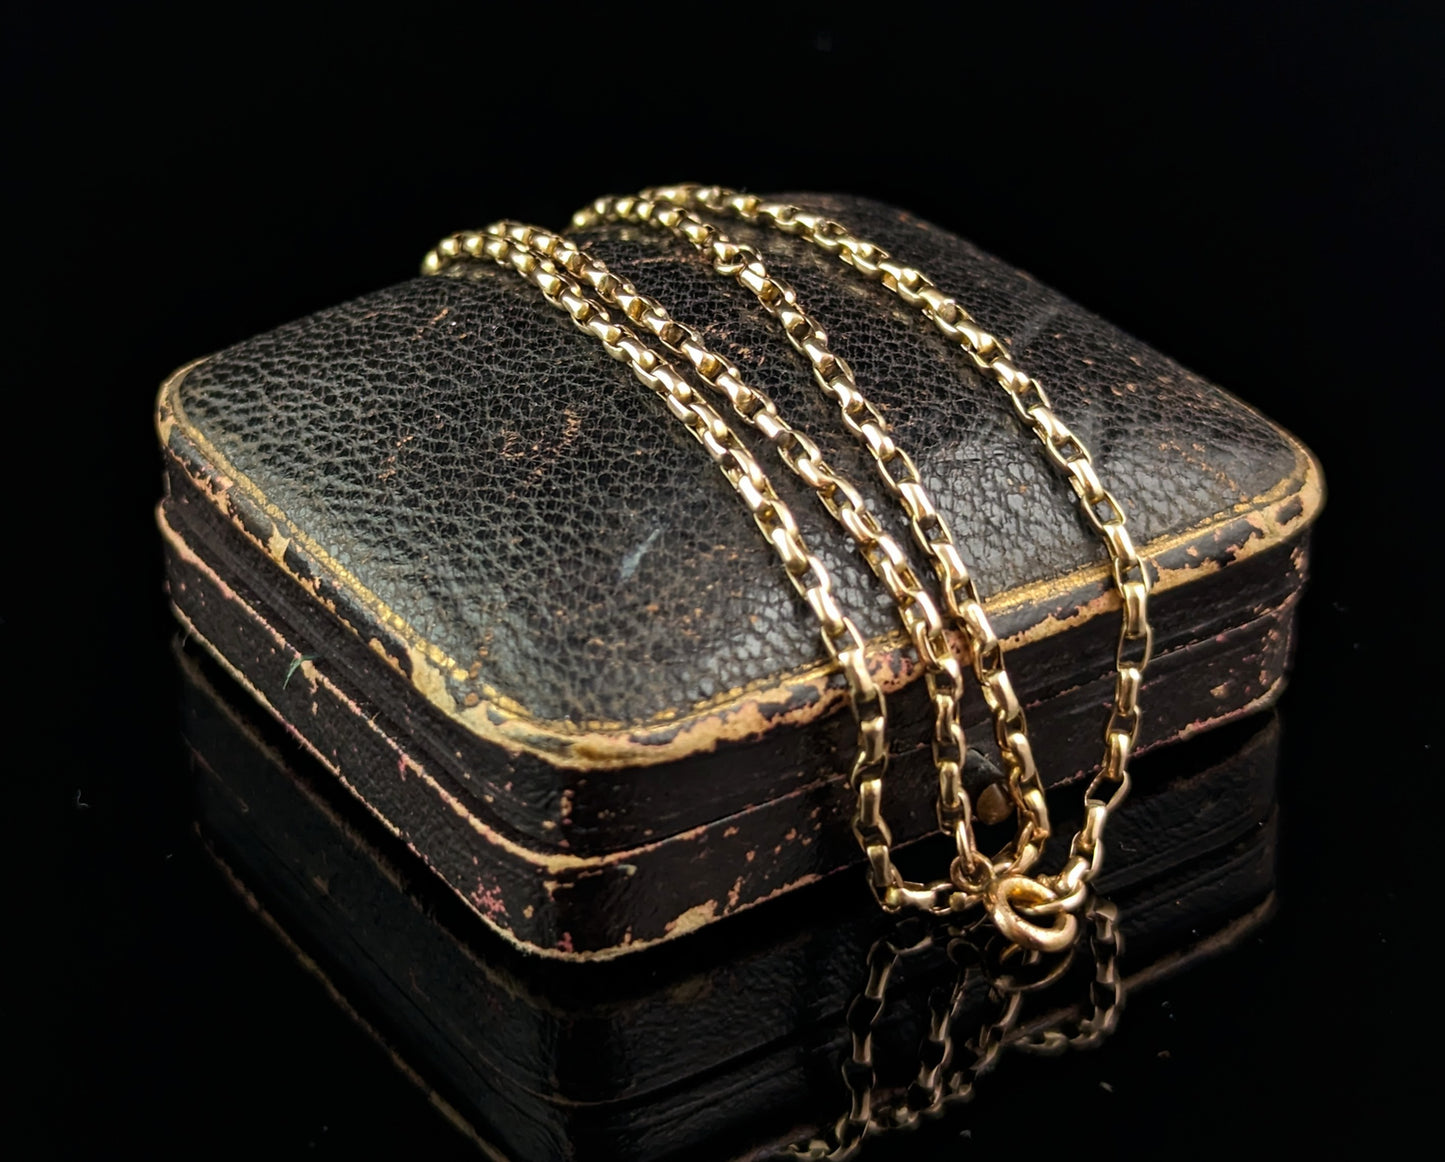 Antique 9ct gold belcher link chain necklace